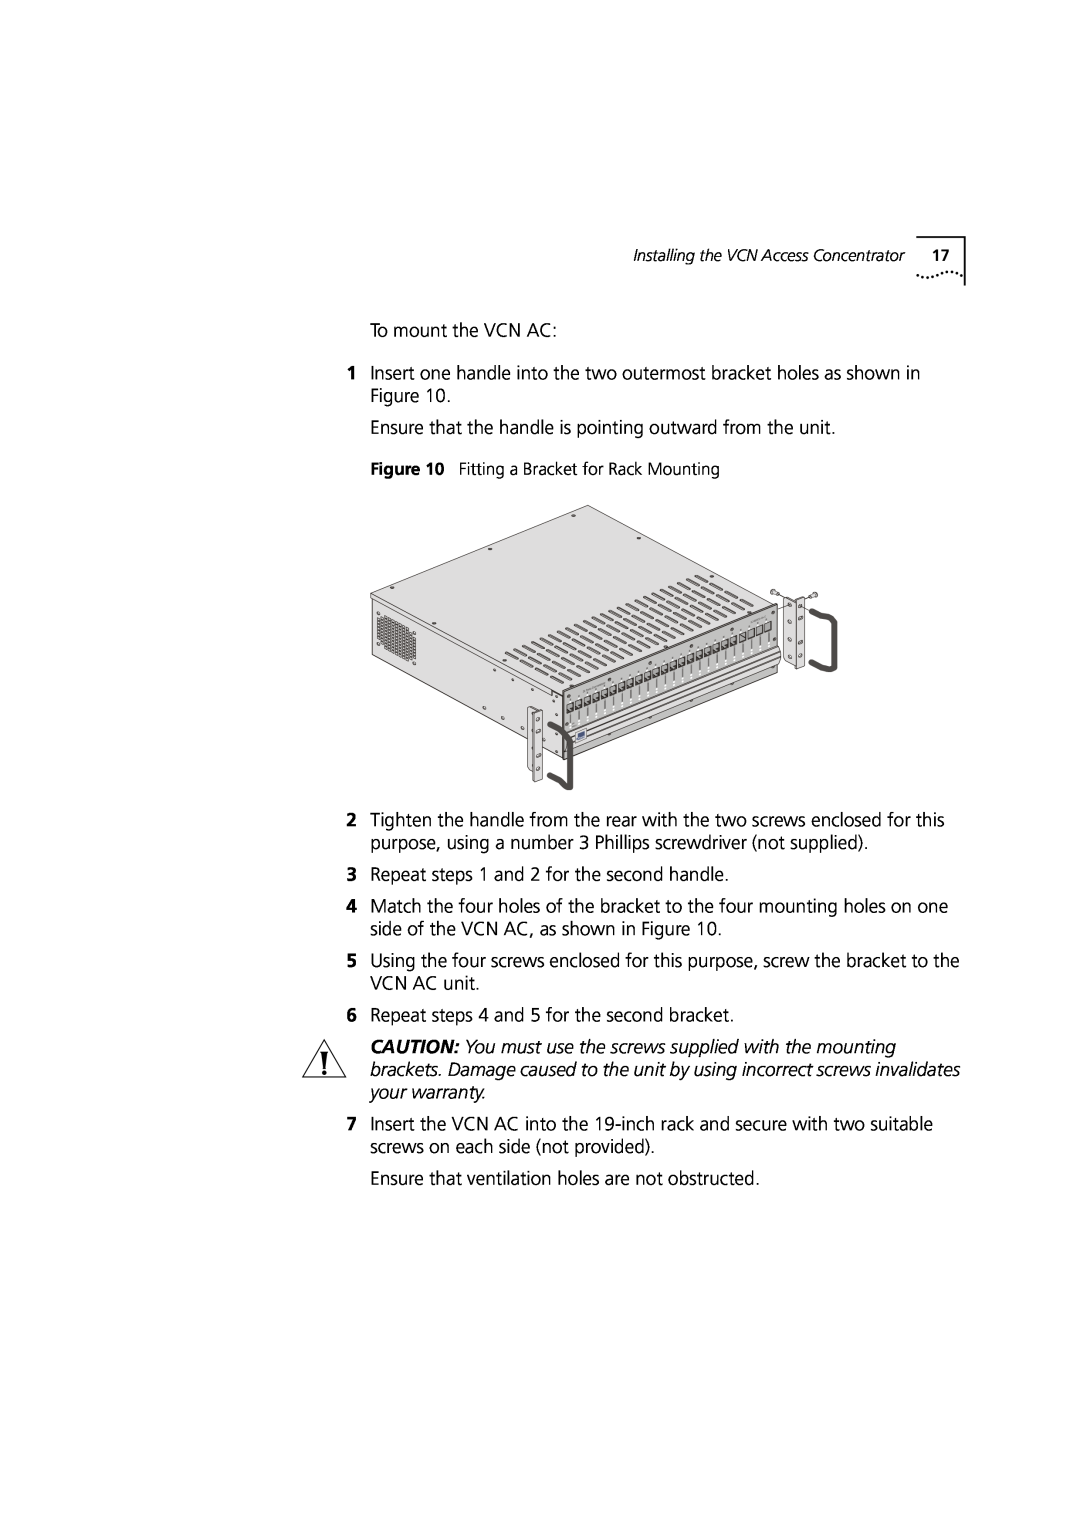 3Com DIA3CV1100-02 manual To mount the VCN AC 